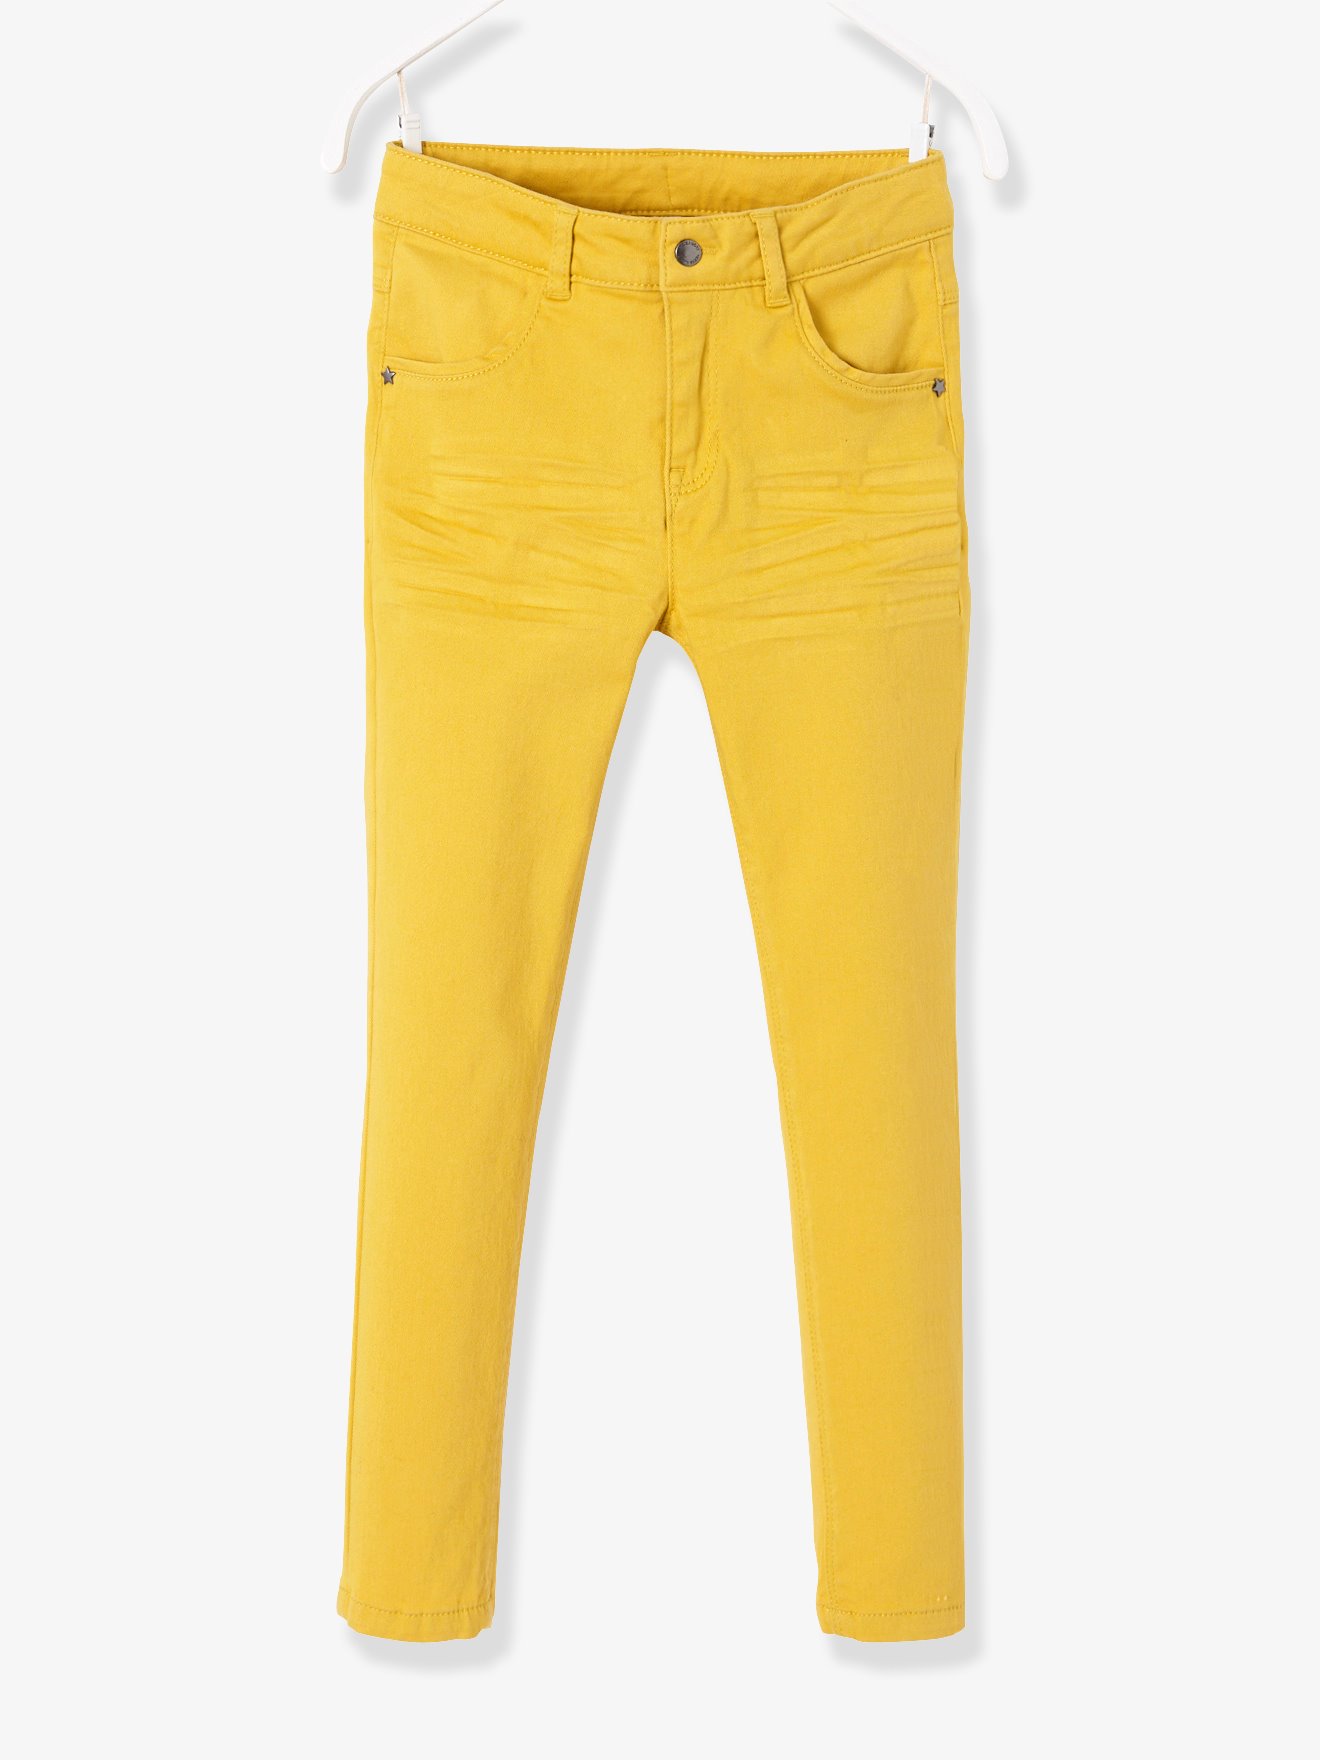 NARROW Hip Slim Trousers for Girls - yellow dark solid, Girls